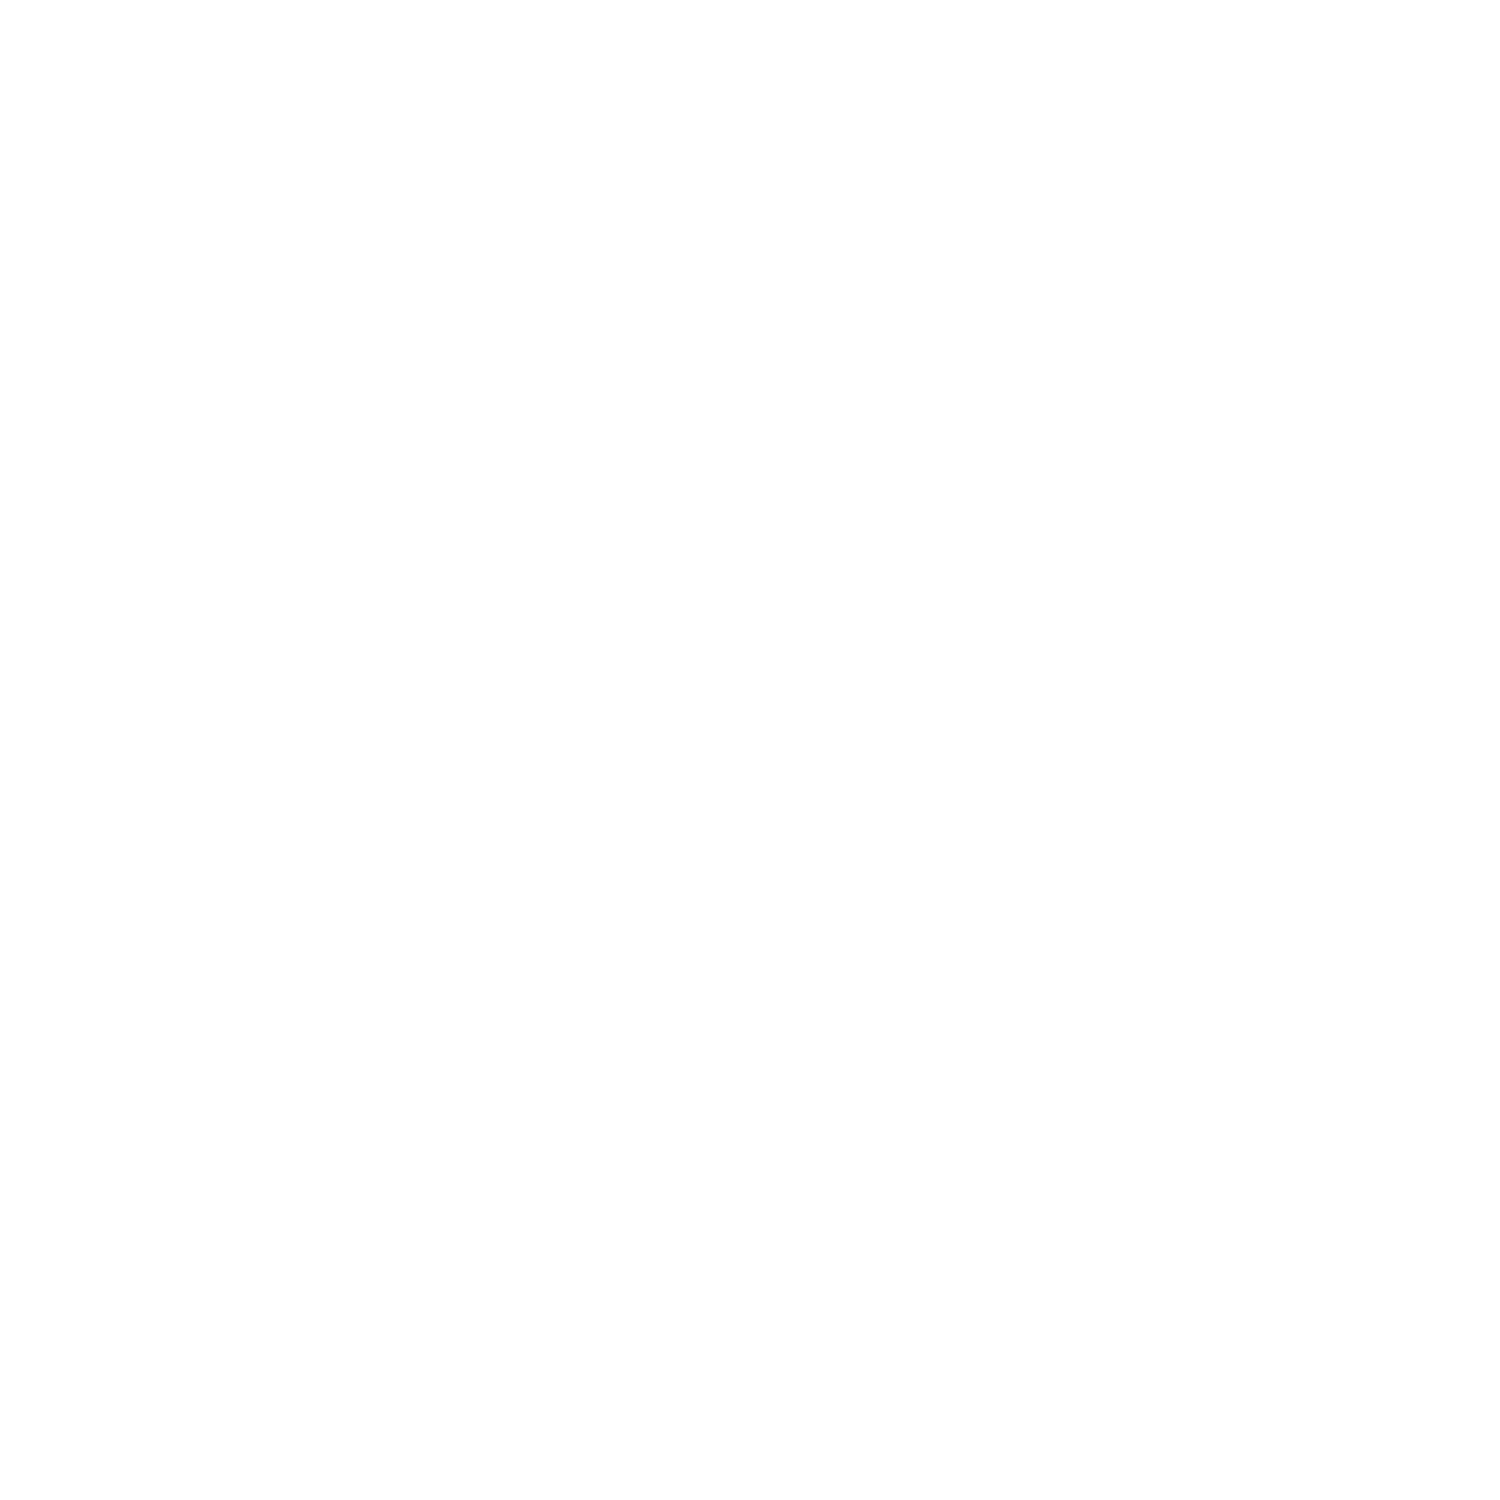 Webdesign Wien: ZAHRL - Web & SEO seit 1999